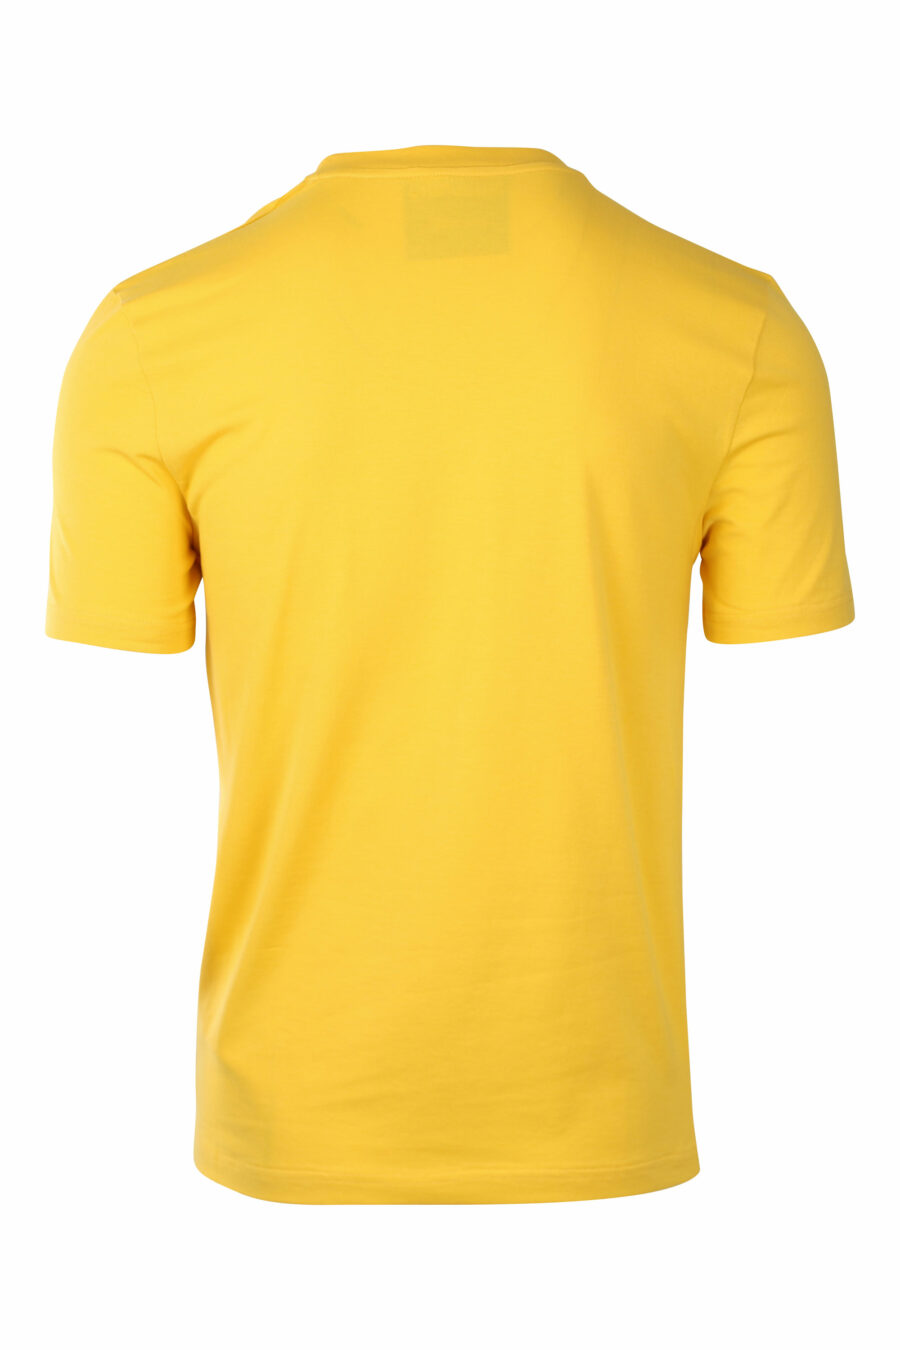 T-shirt jaune avec logo "signature" - IMG 1422